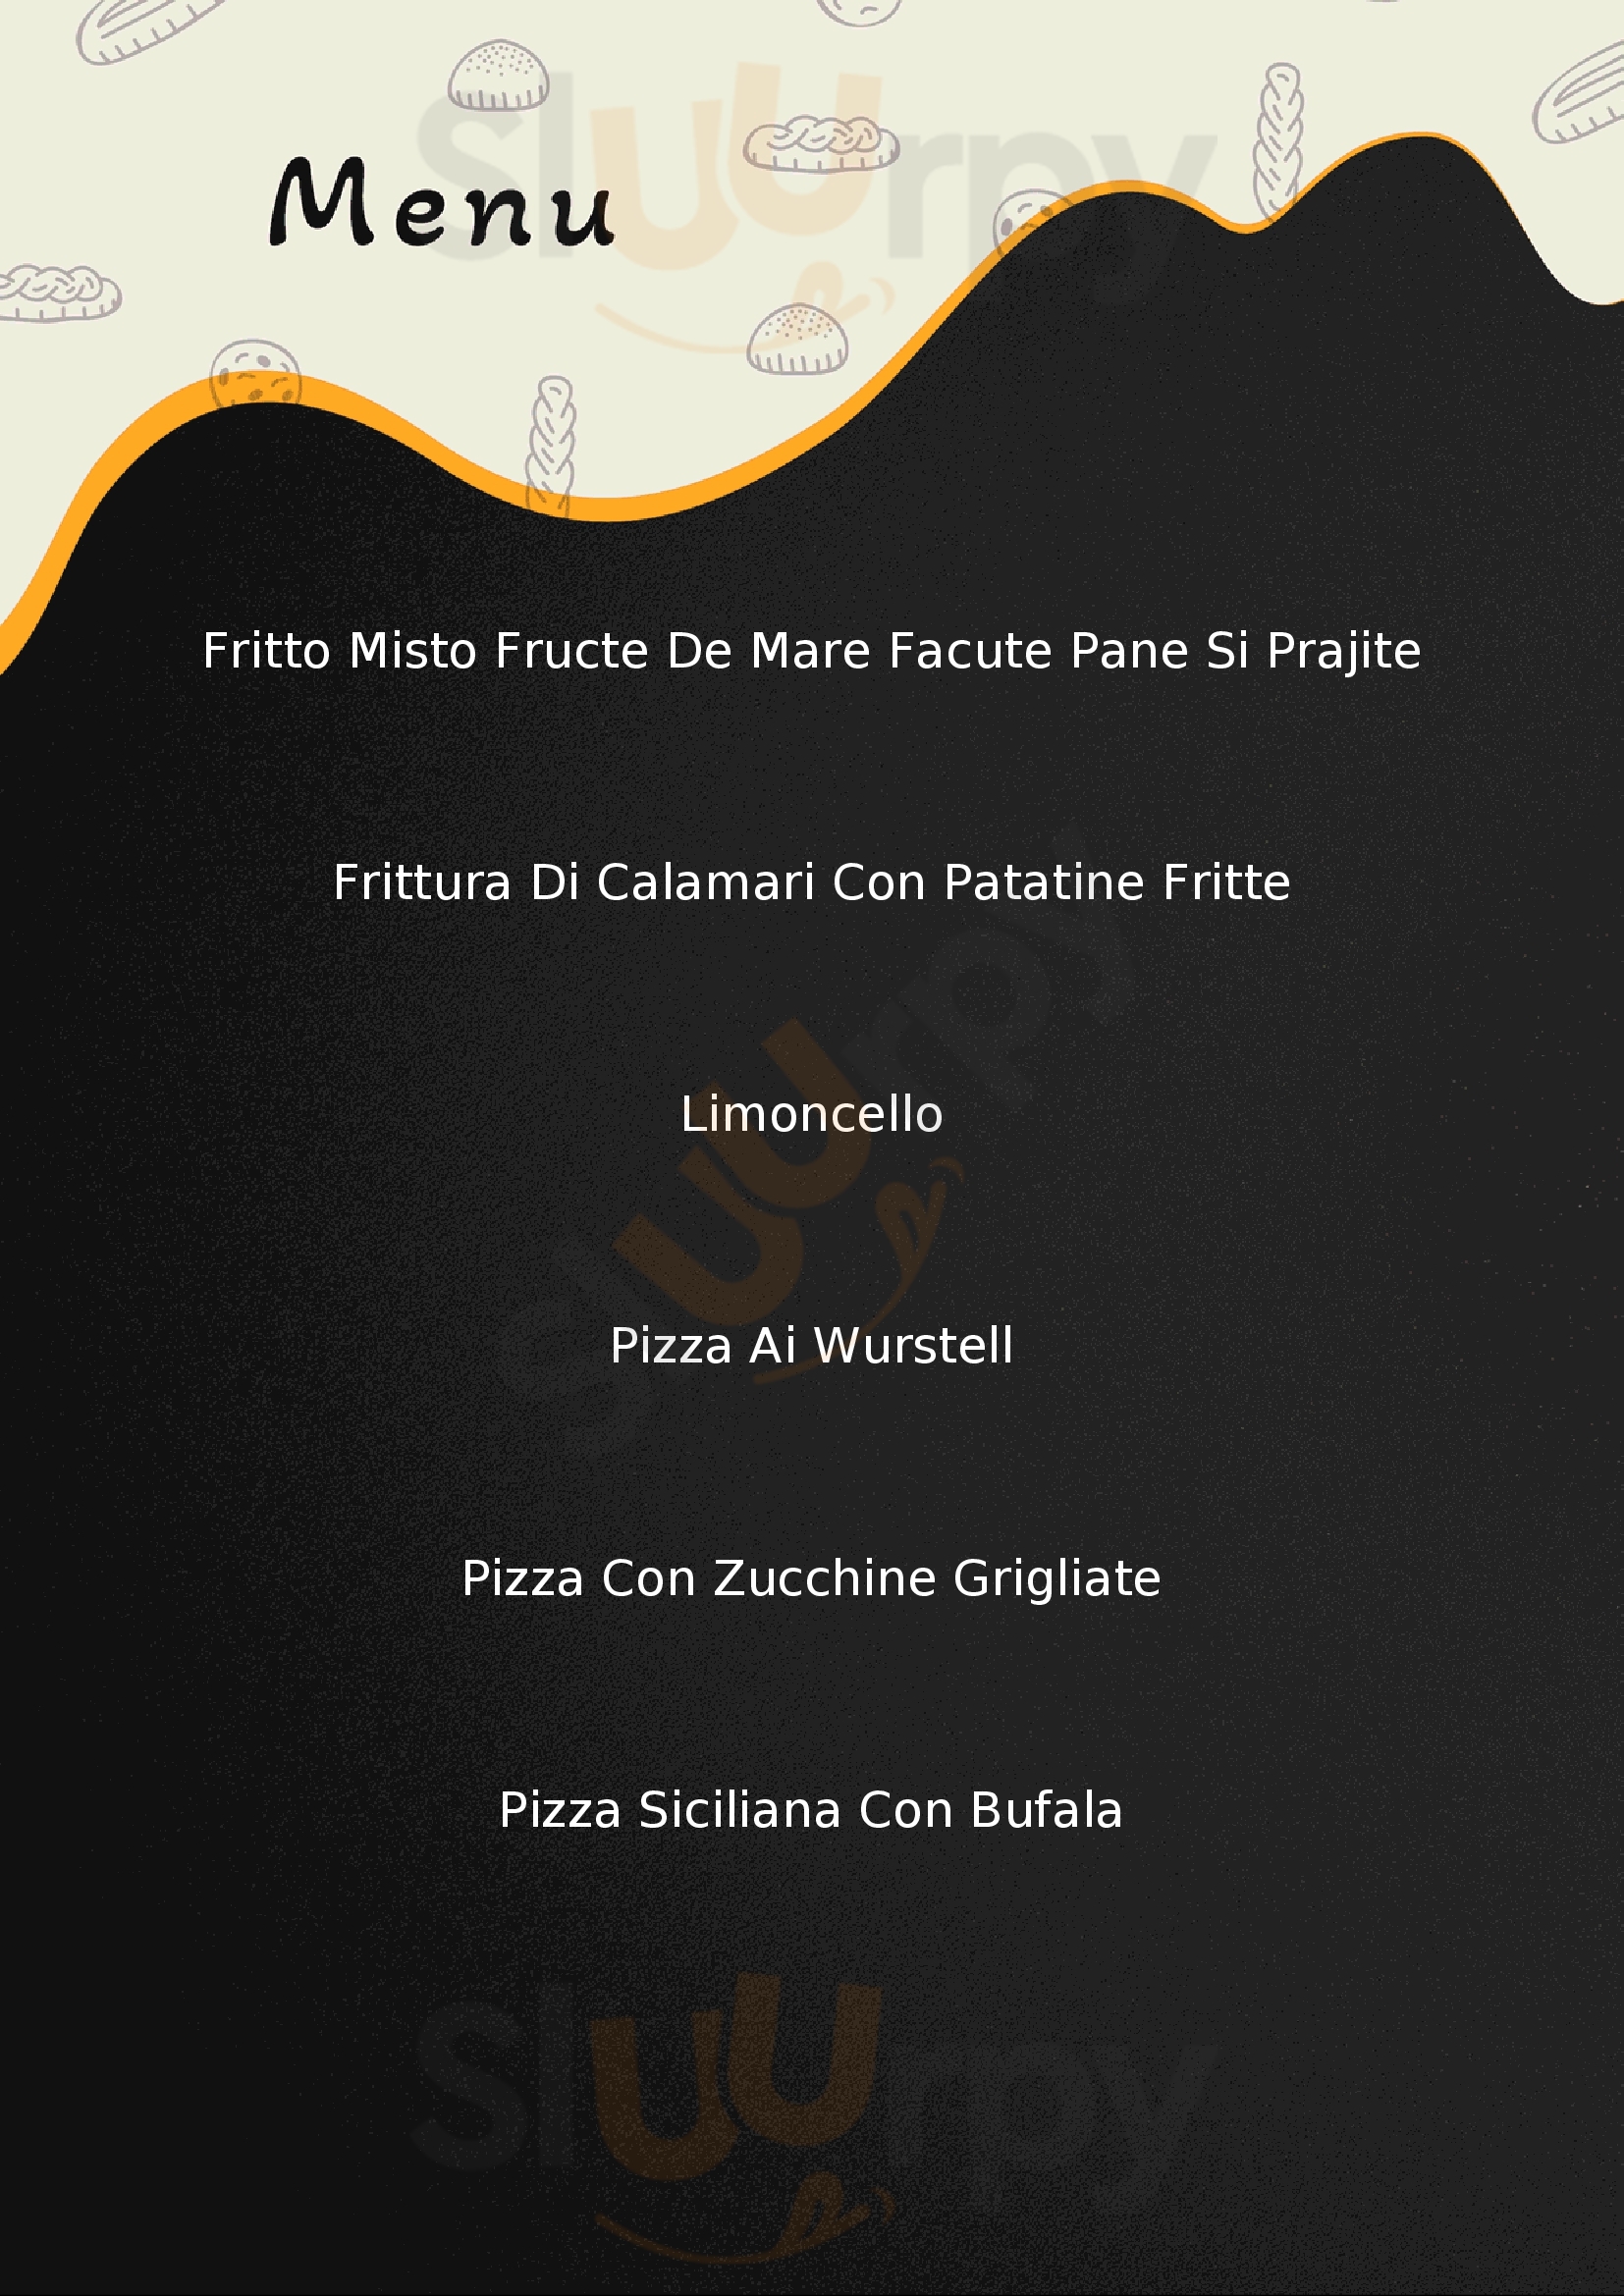 Ristorante Pizzeria Grotta Azzurra Aosta menù 1 pagina